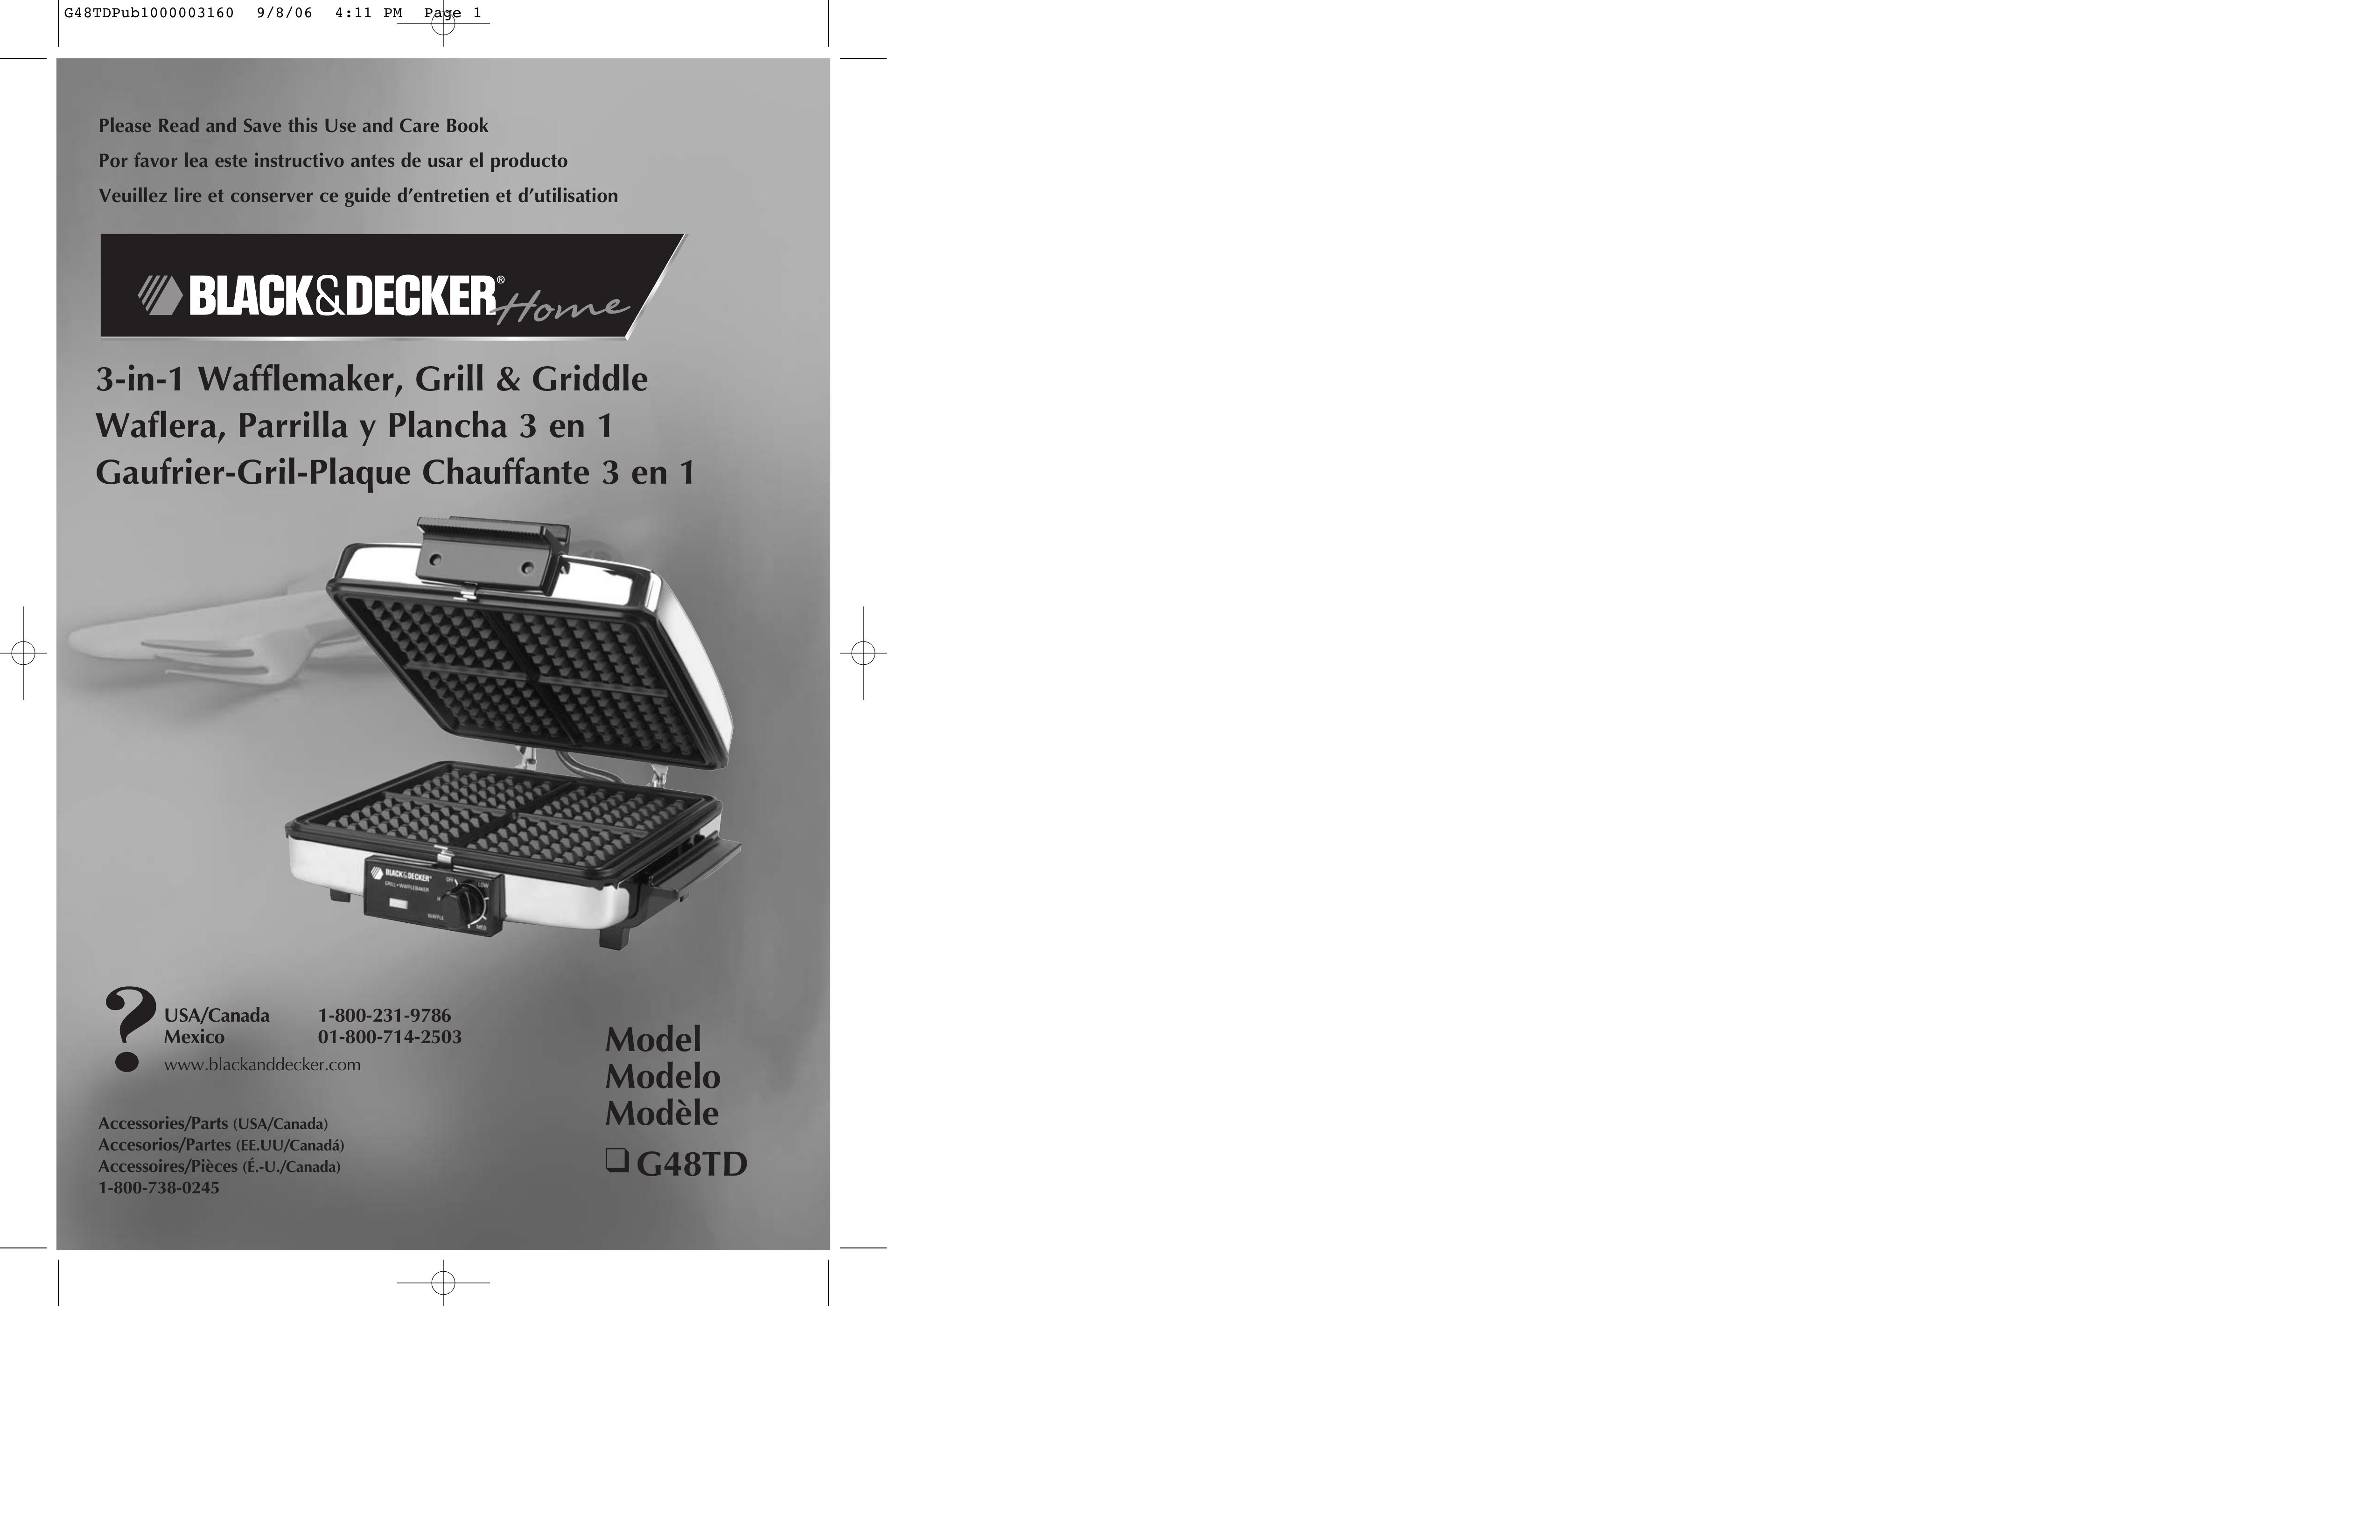 Black & Decker G48TD Waffle Iron User Manual